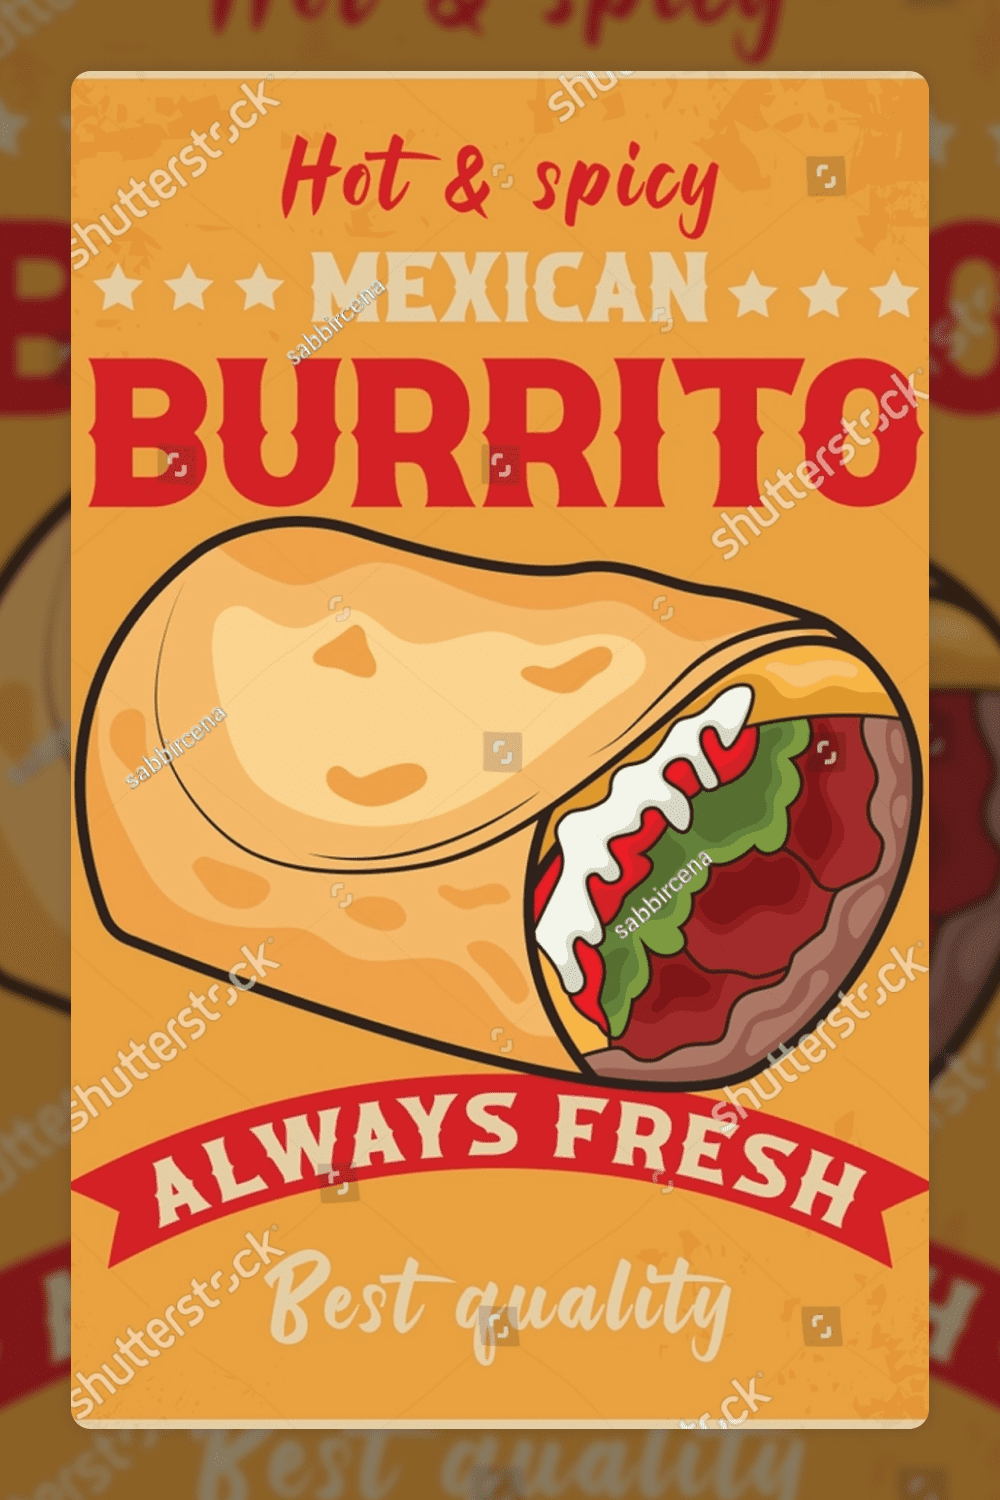 Burrito Mexican food restaurant advertisement retro poster vector design.